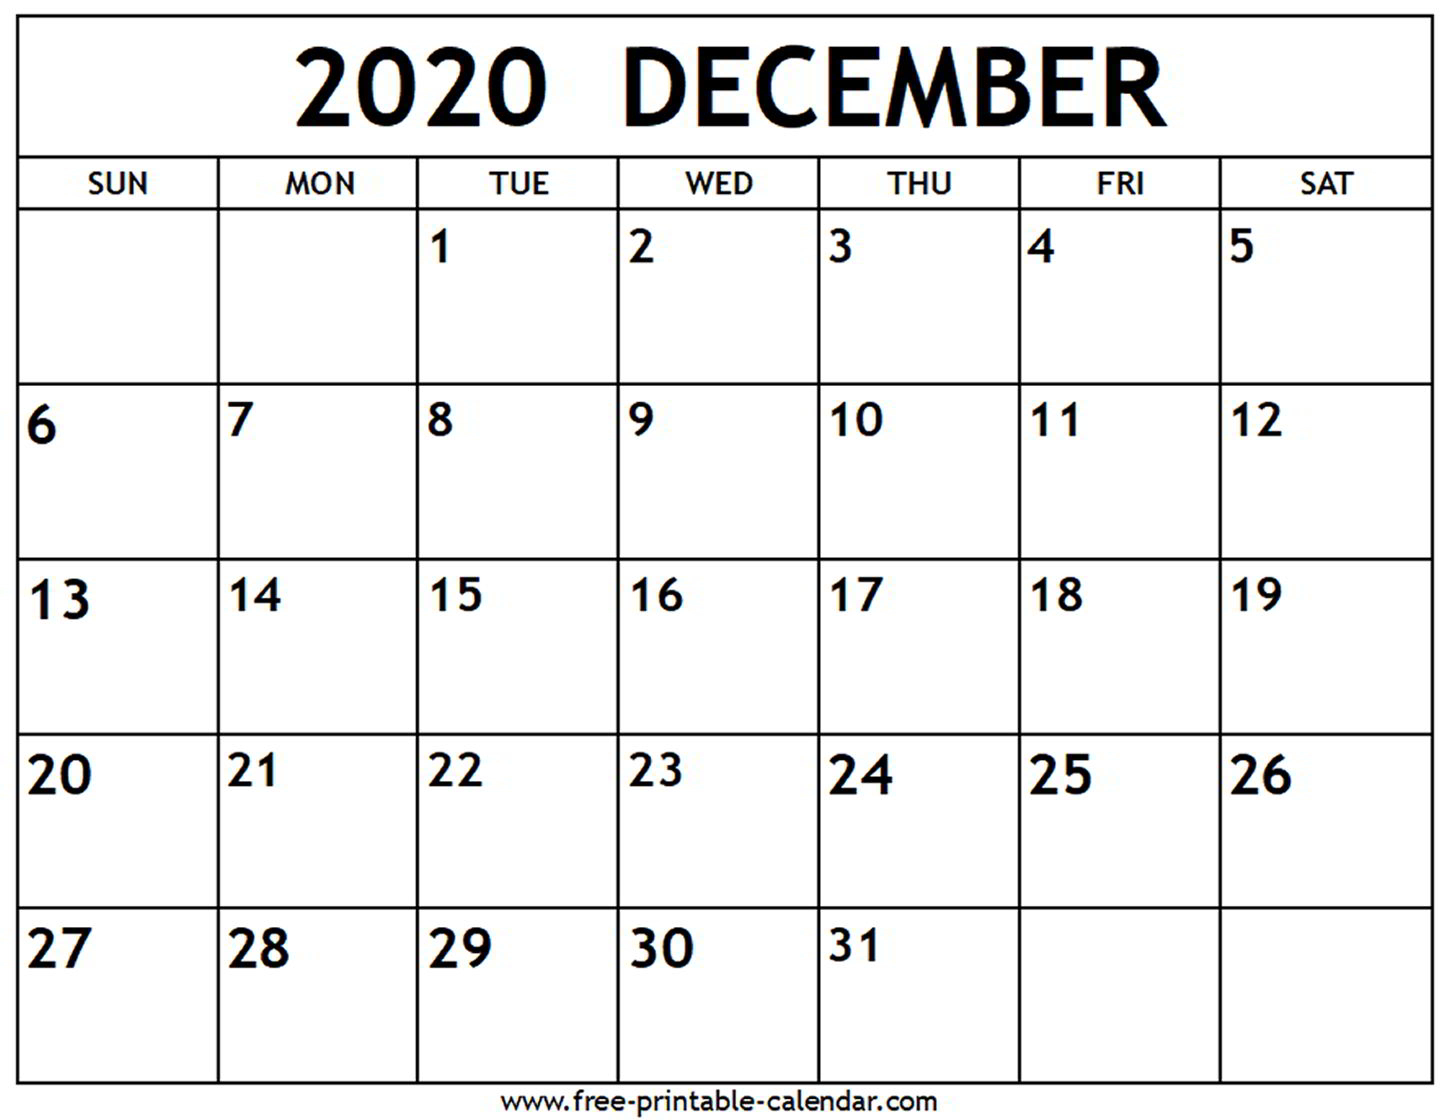 December 2020 Calendar  Freeprintablecalendar with regard to Calendar 2020 December